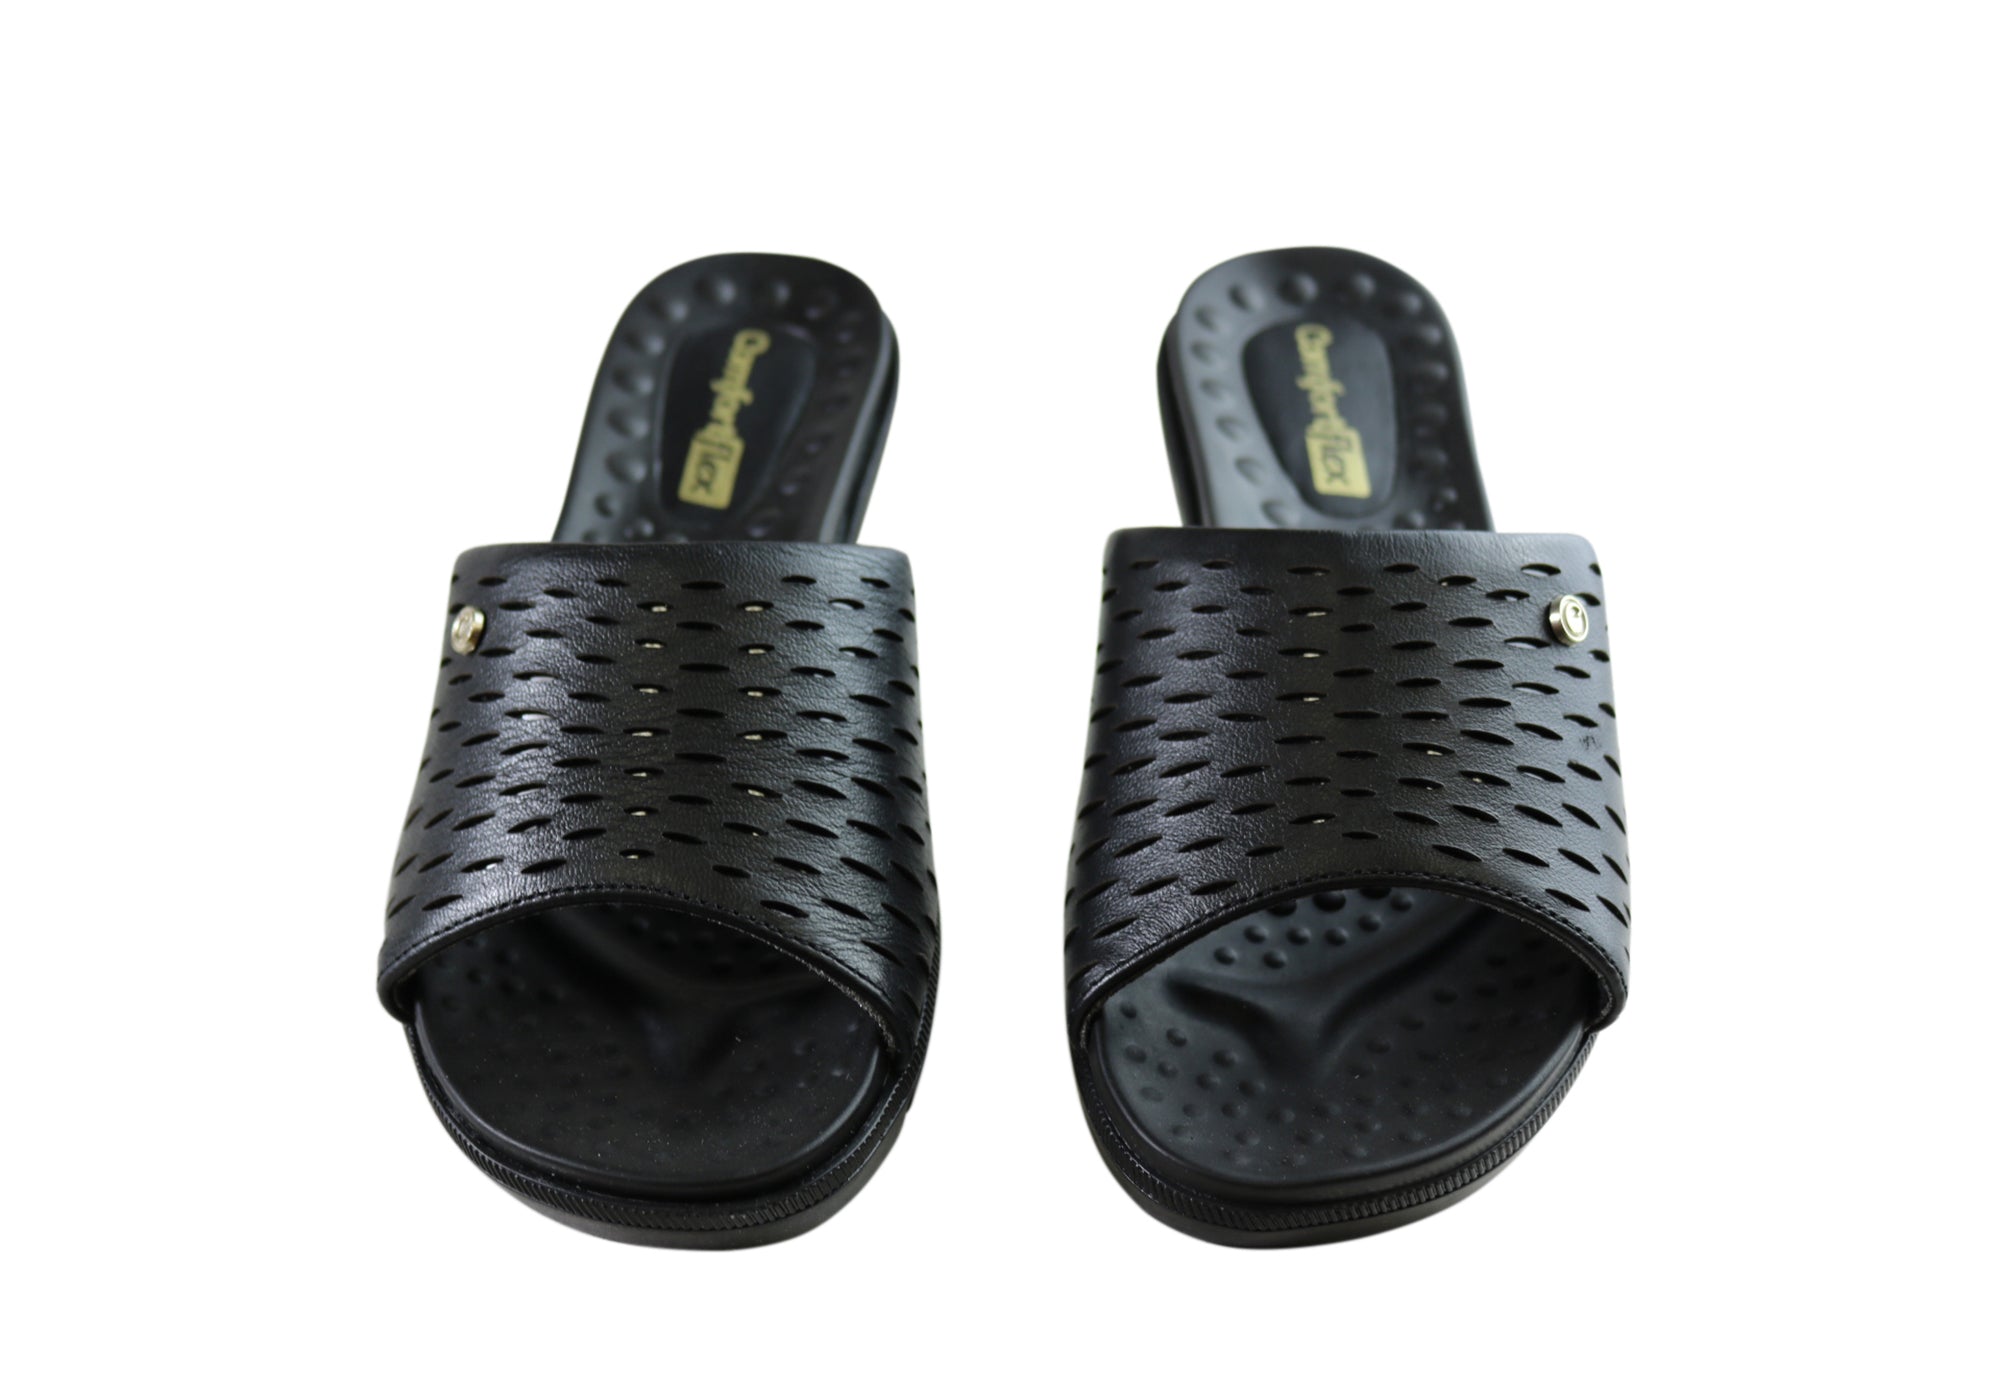 Comfortflex Denise Womens Leather Slides Sandals Made In Brazil